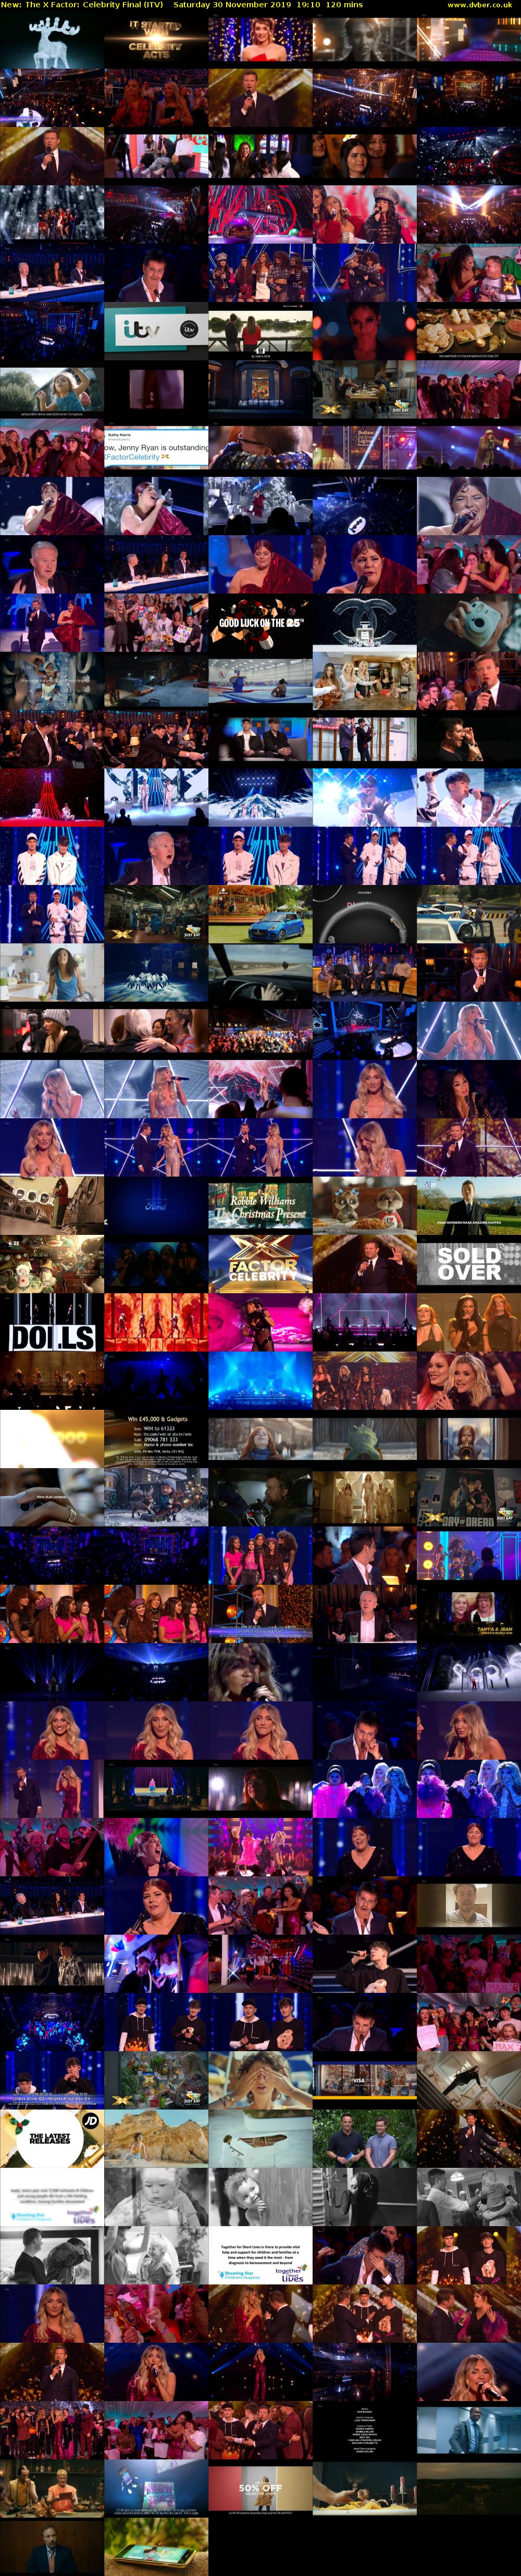 The X Factor: Celebrity Final (ITV) Saturday 30 November 2019 19:10 - 21:10